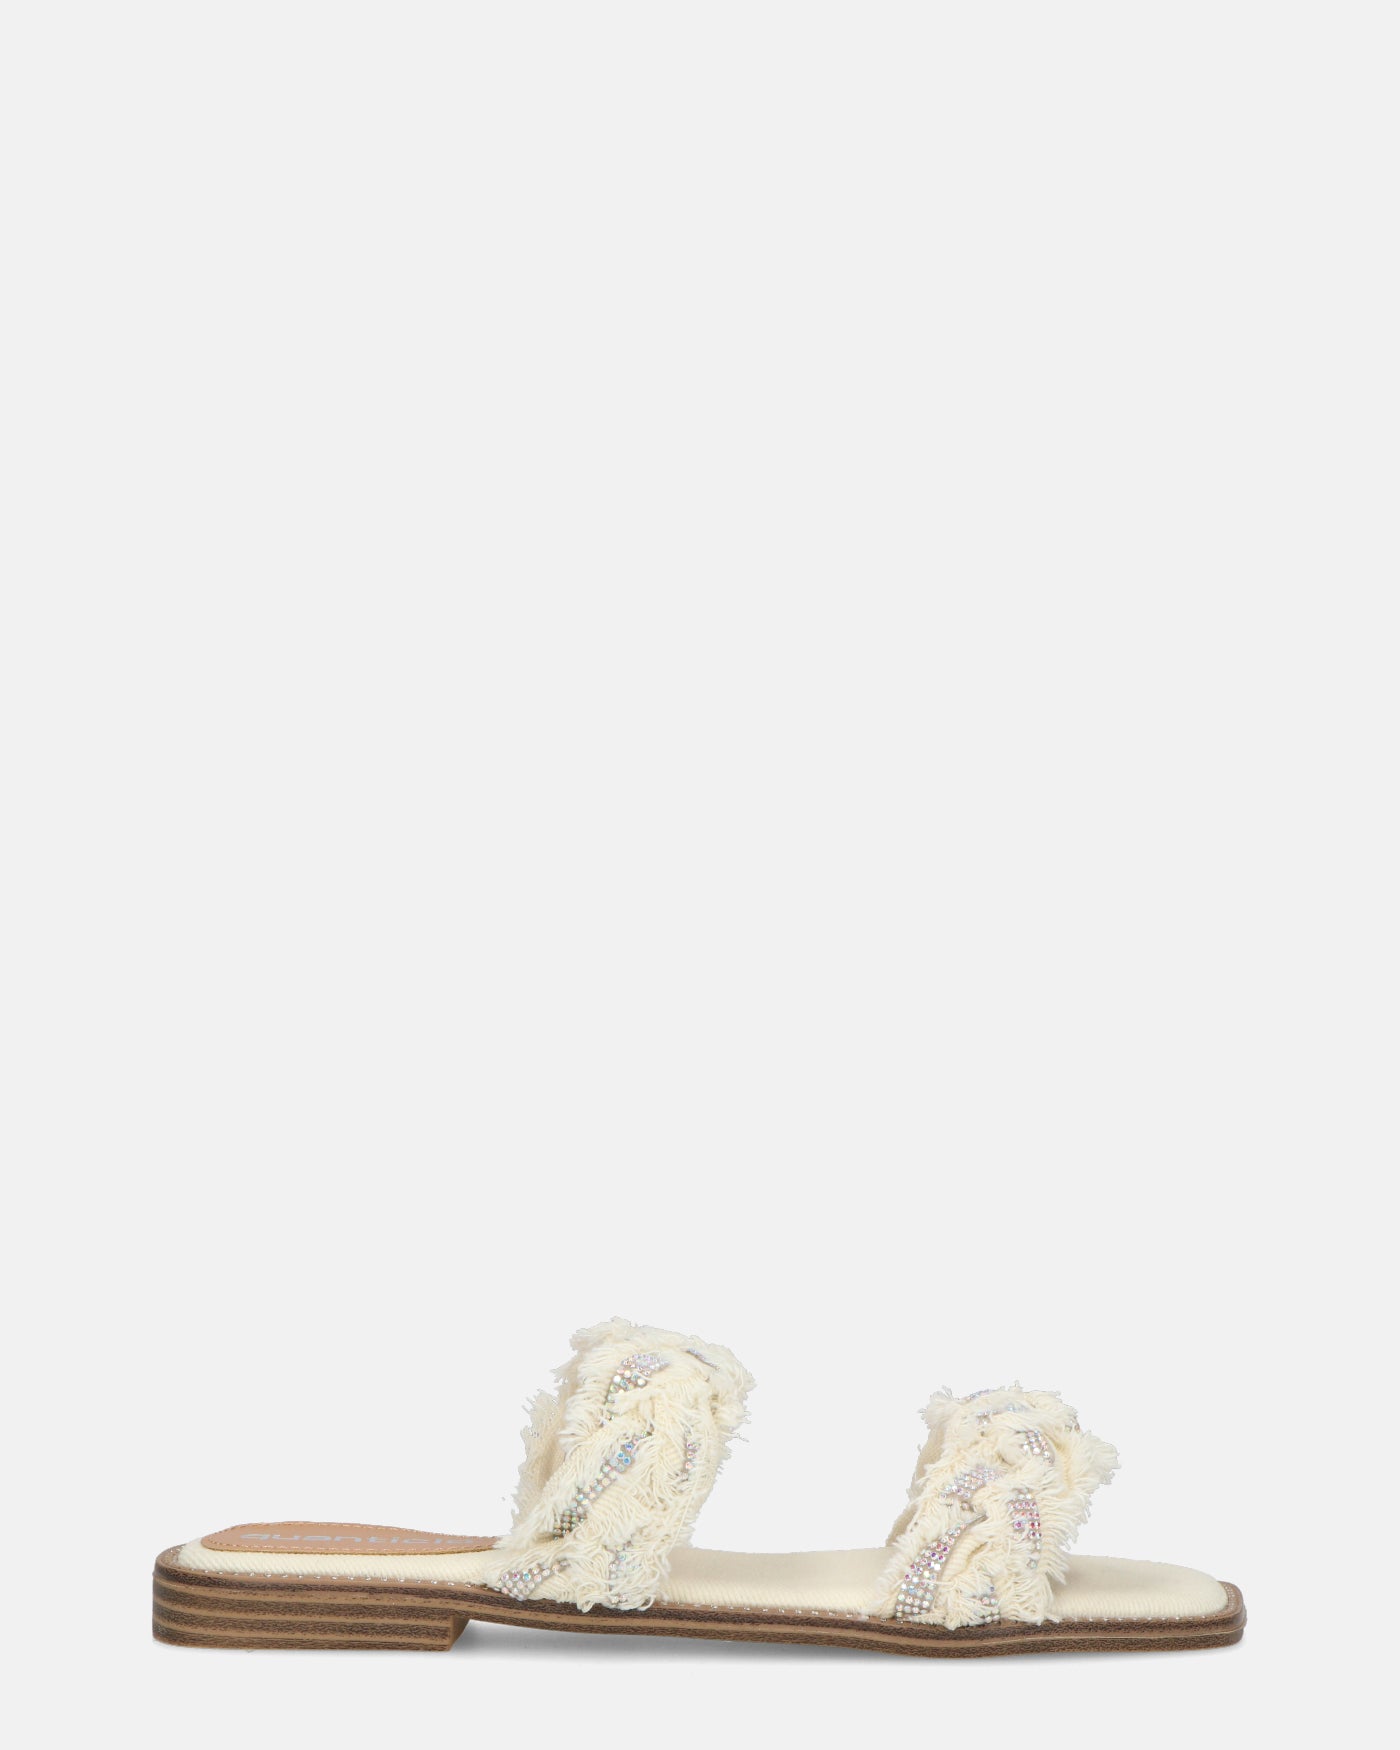 KALI - light beige fabric sandals with gems